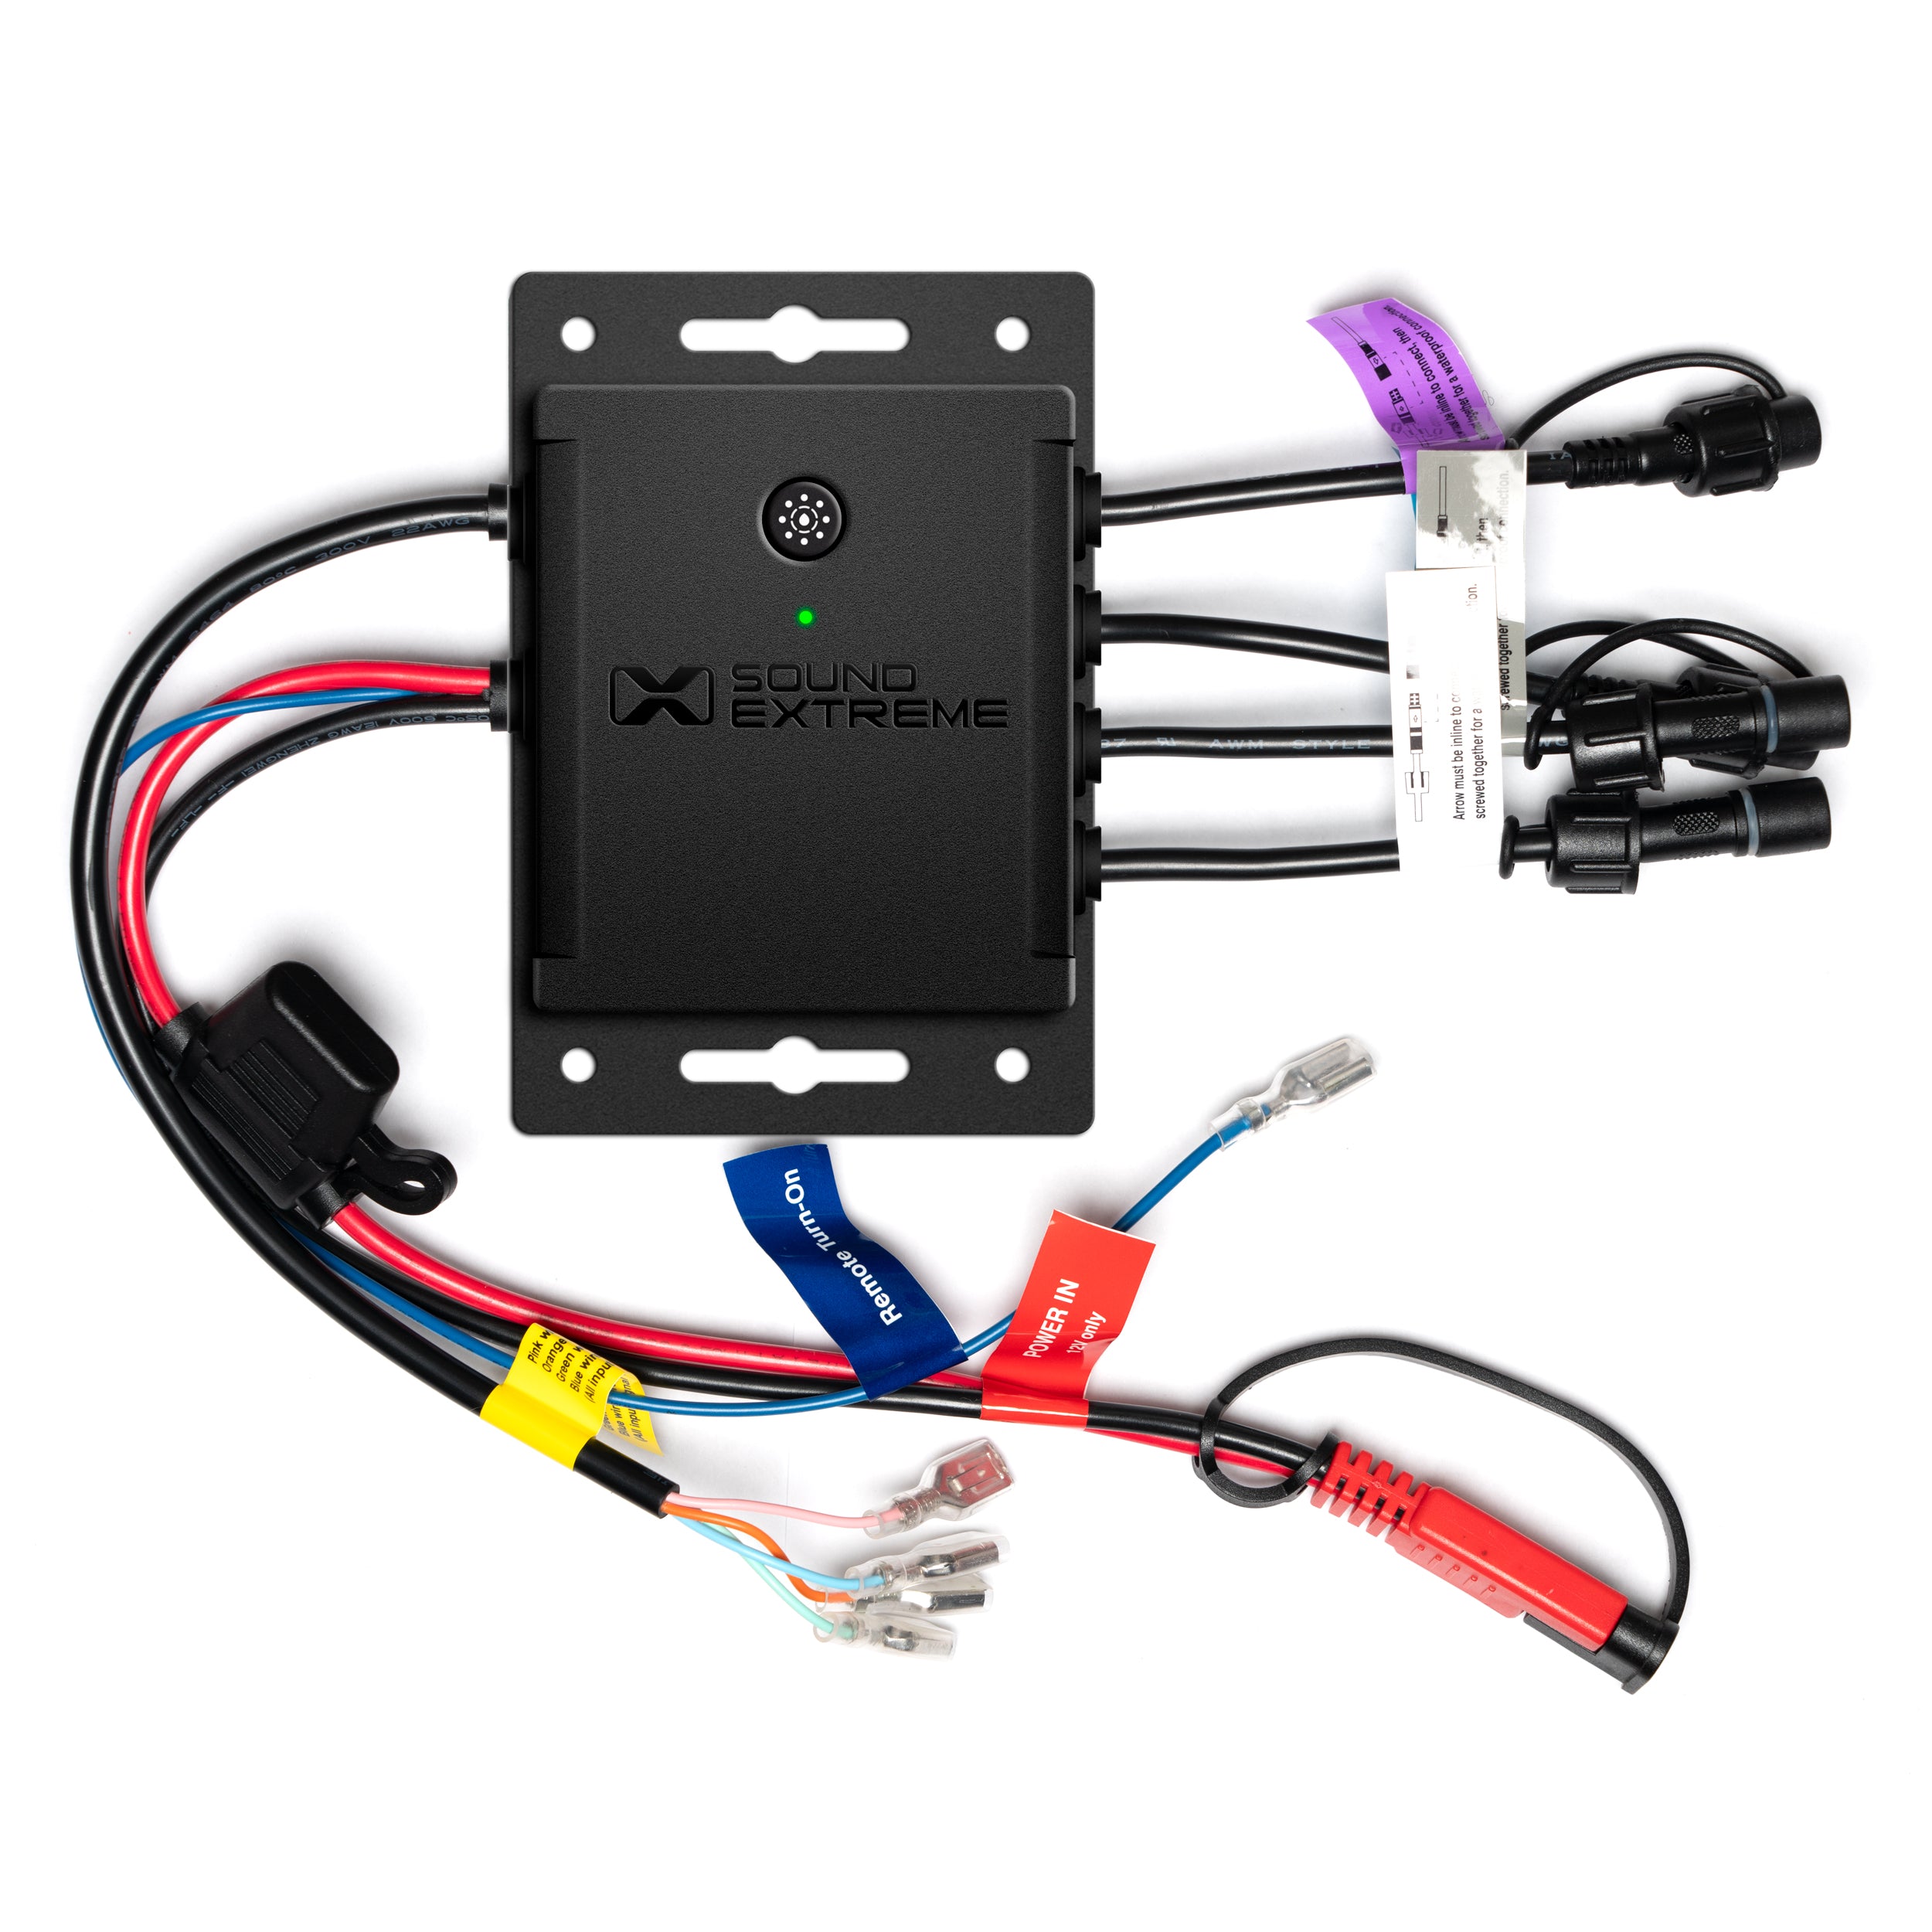 Extreme Whip Kit Qty 1 x 4 Ft plus LEDCast Controller - SoundExtreme